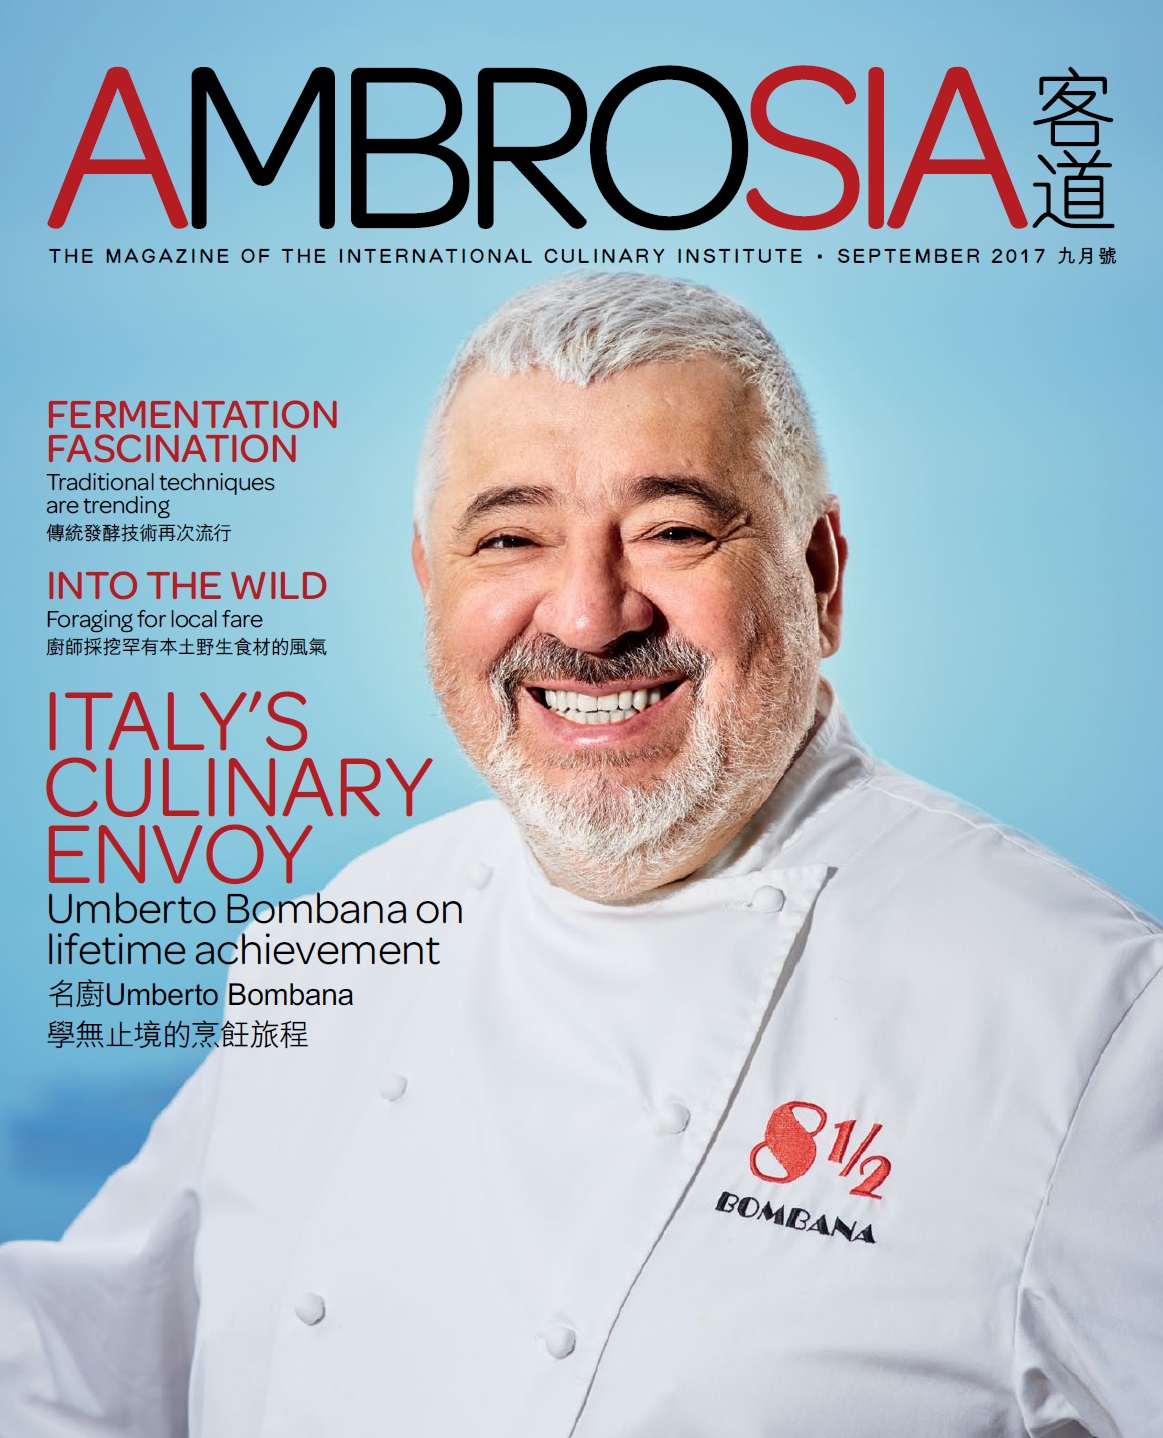 AMBROSIA (September 2017 issue)